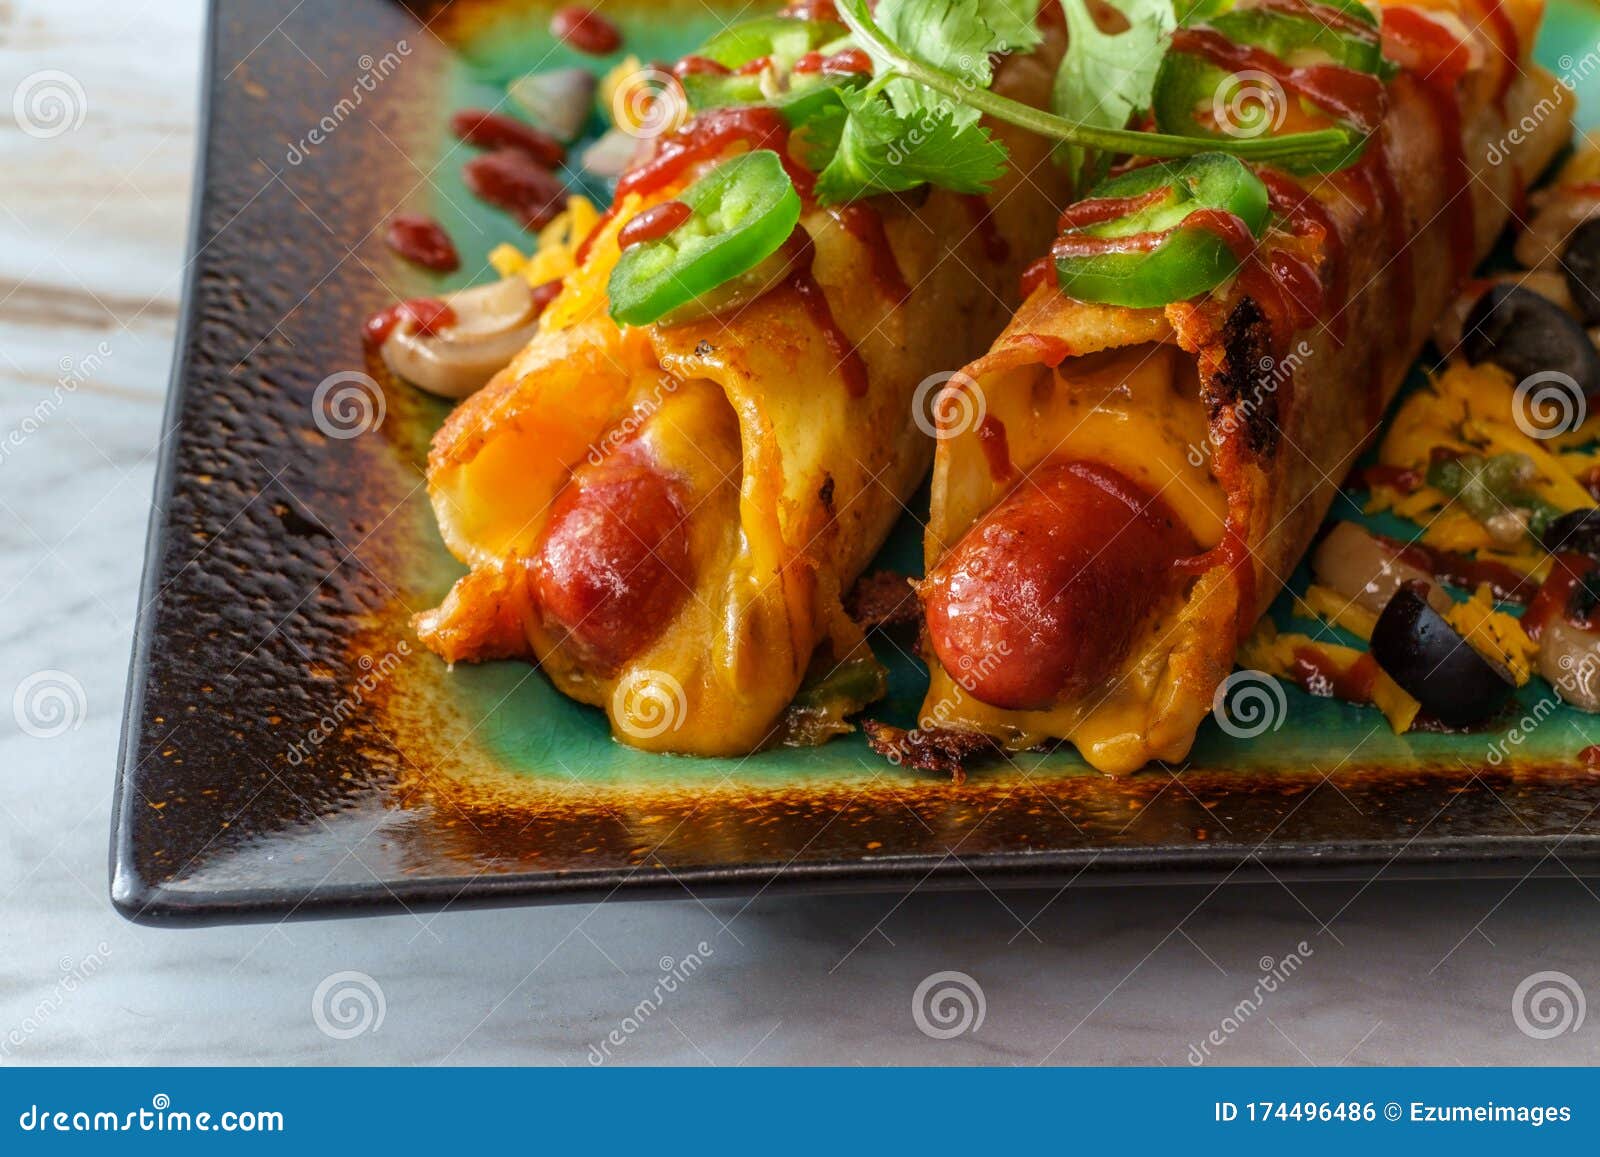 tortilla wrap hot dogs